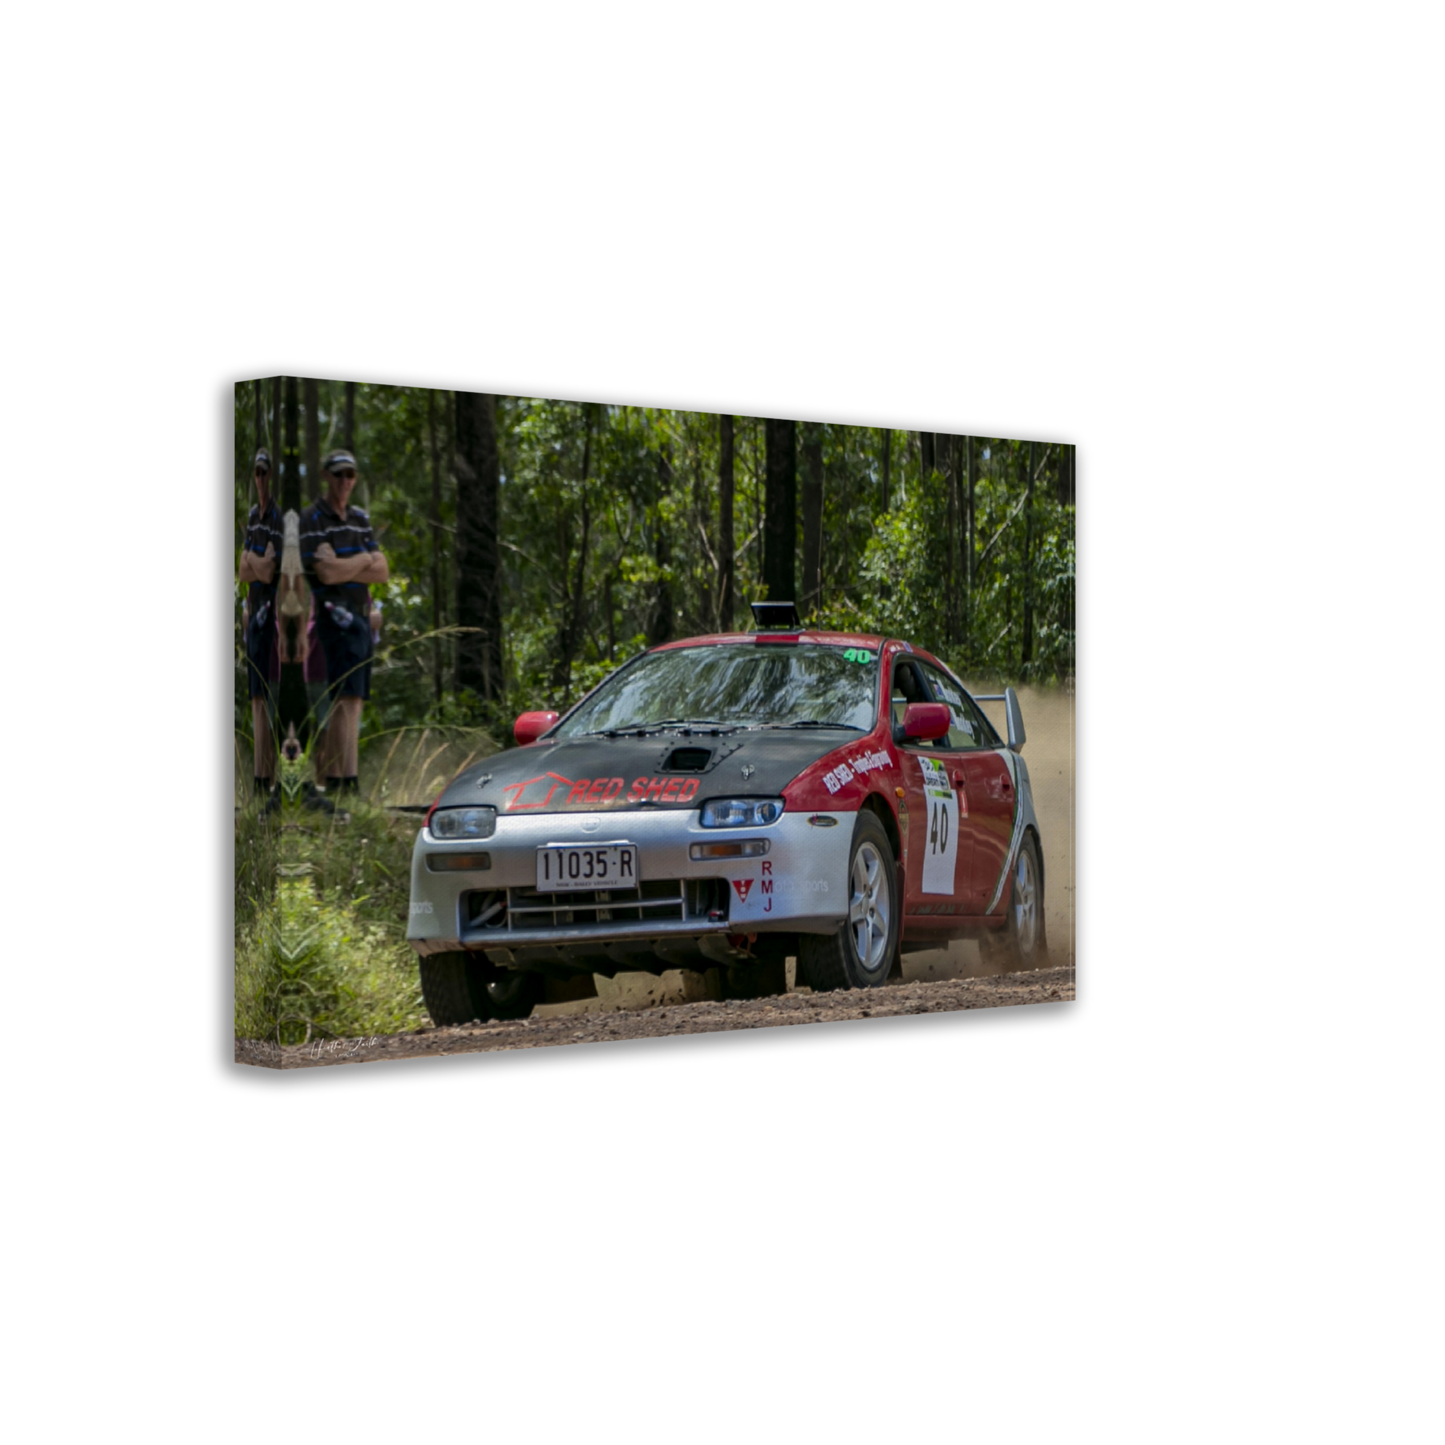 Amsag Taree Rally - Car 40 - Mick Monkley / Jake Monkley